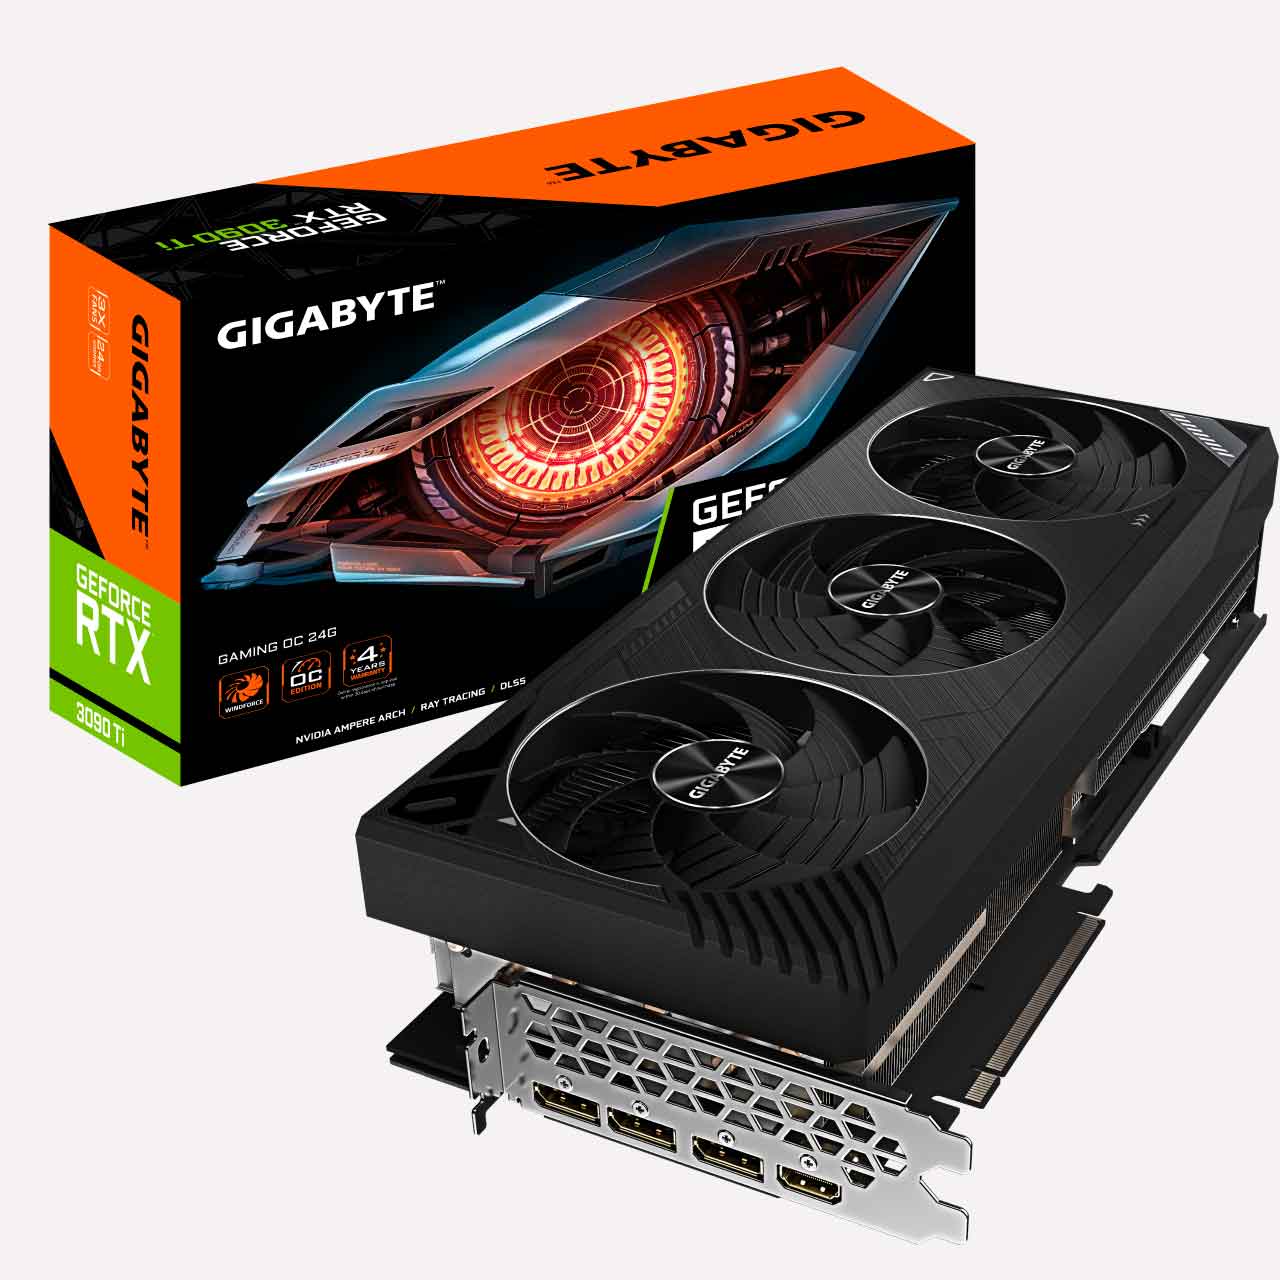 Gigabyte presenta sus GeForce RTX 3090 Ti